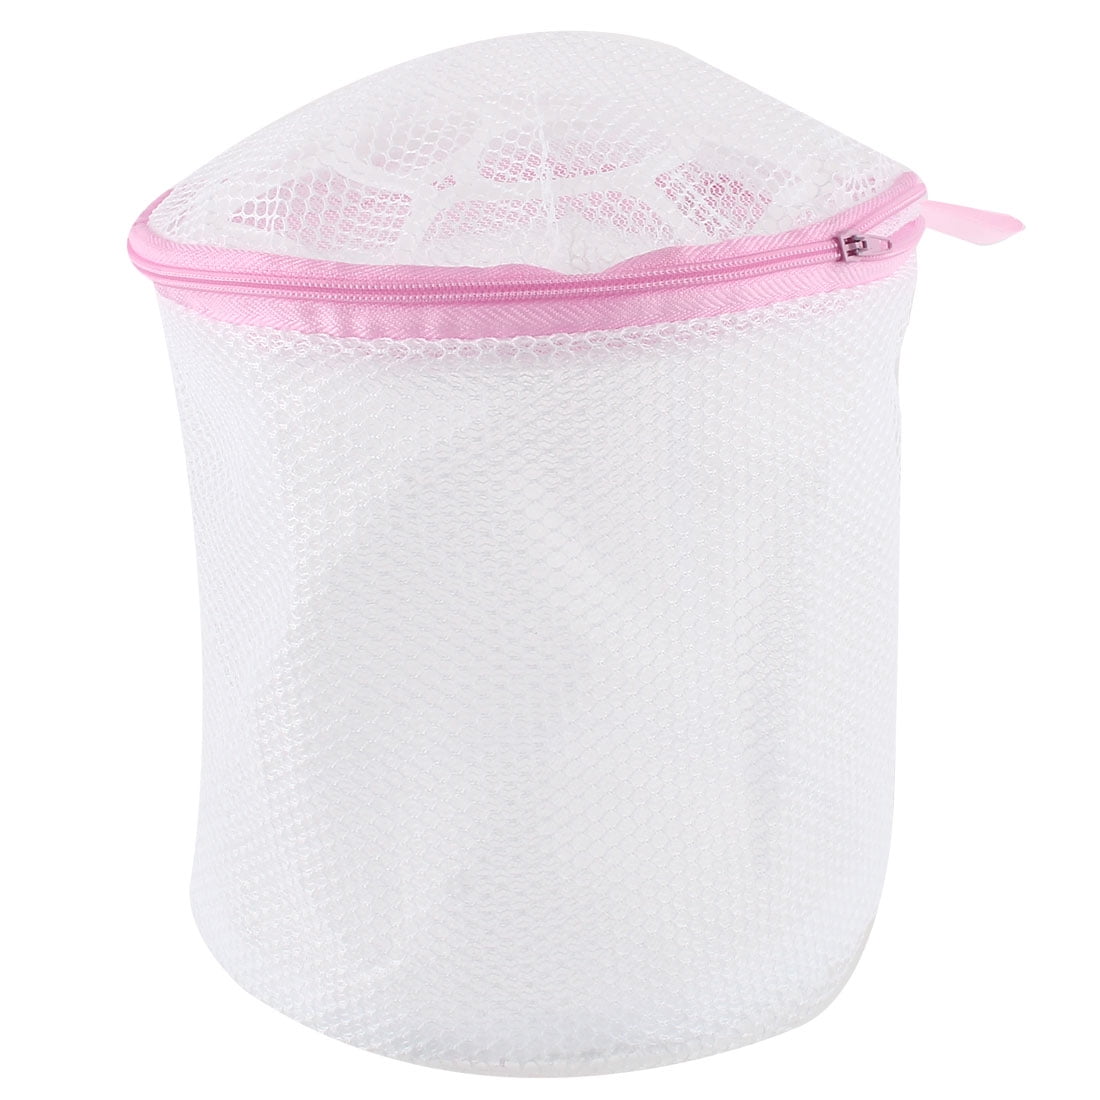 Mesh Laundry Bag For Bra Delicates Lingerie Clothes Wash Bag Home Accessories A 